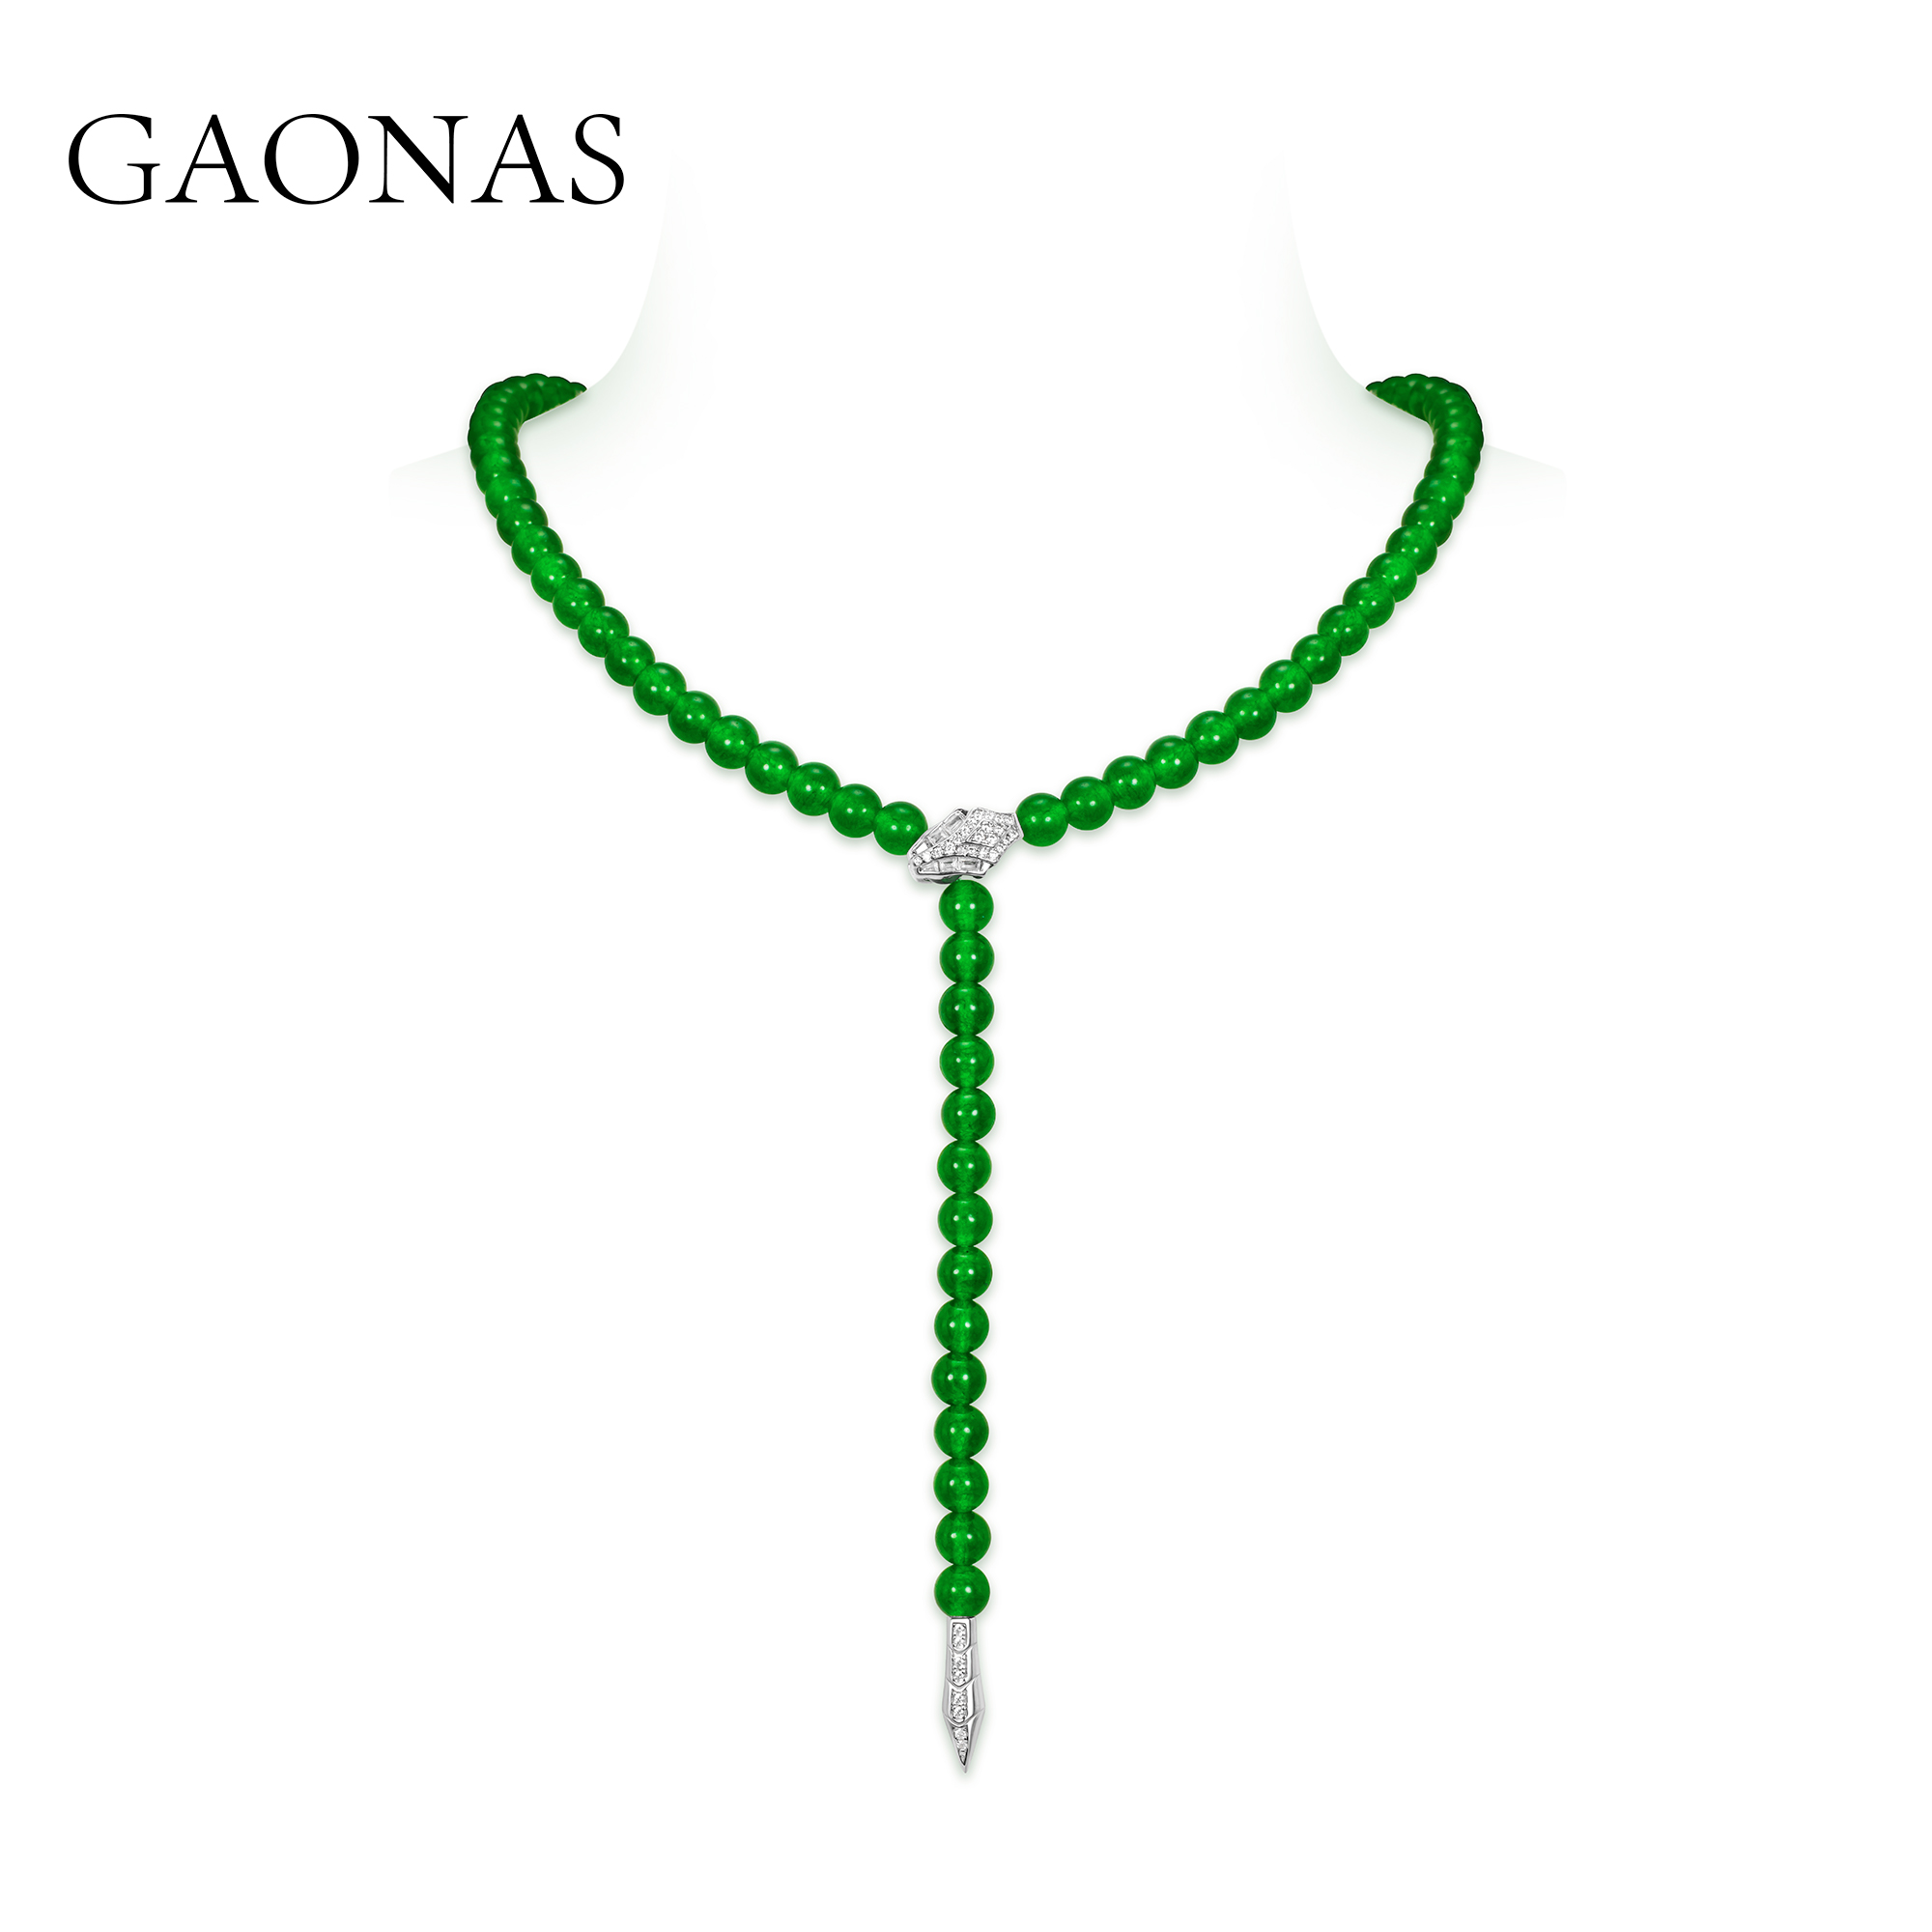 GAONAS 坠链均925银合成锆石 国风新潮时尚设计款绿珠项链10328XG